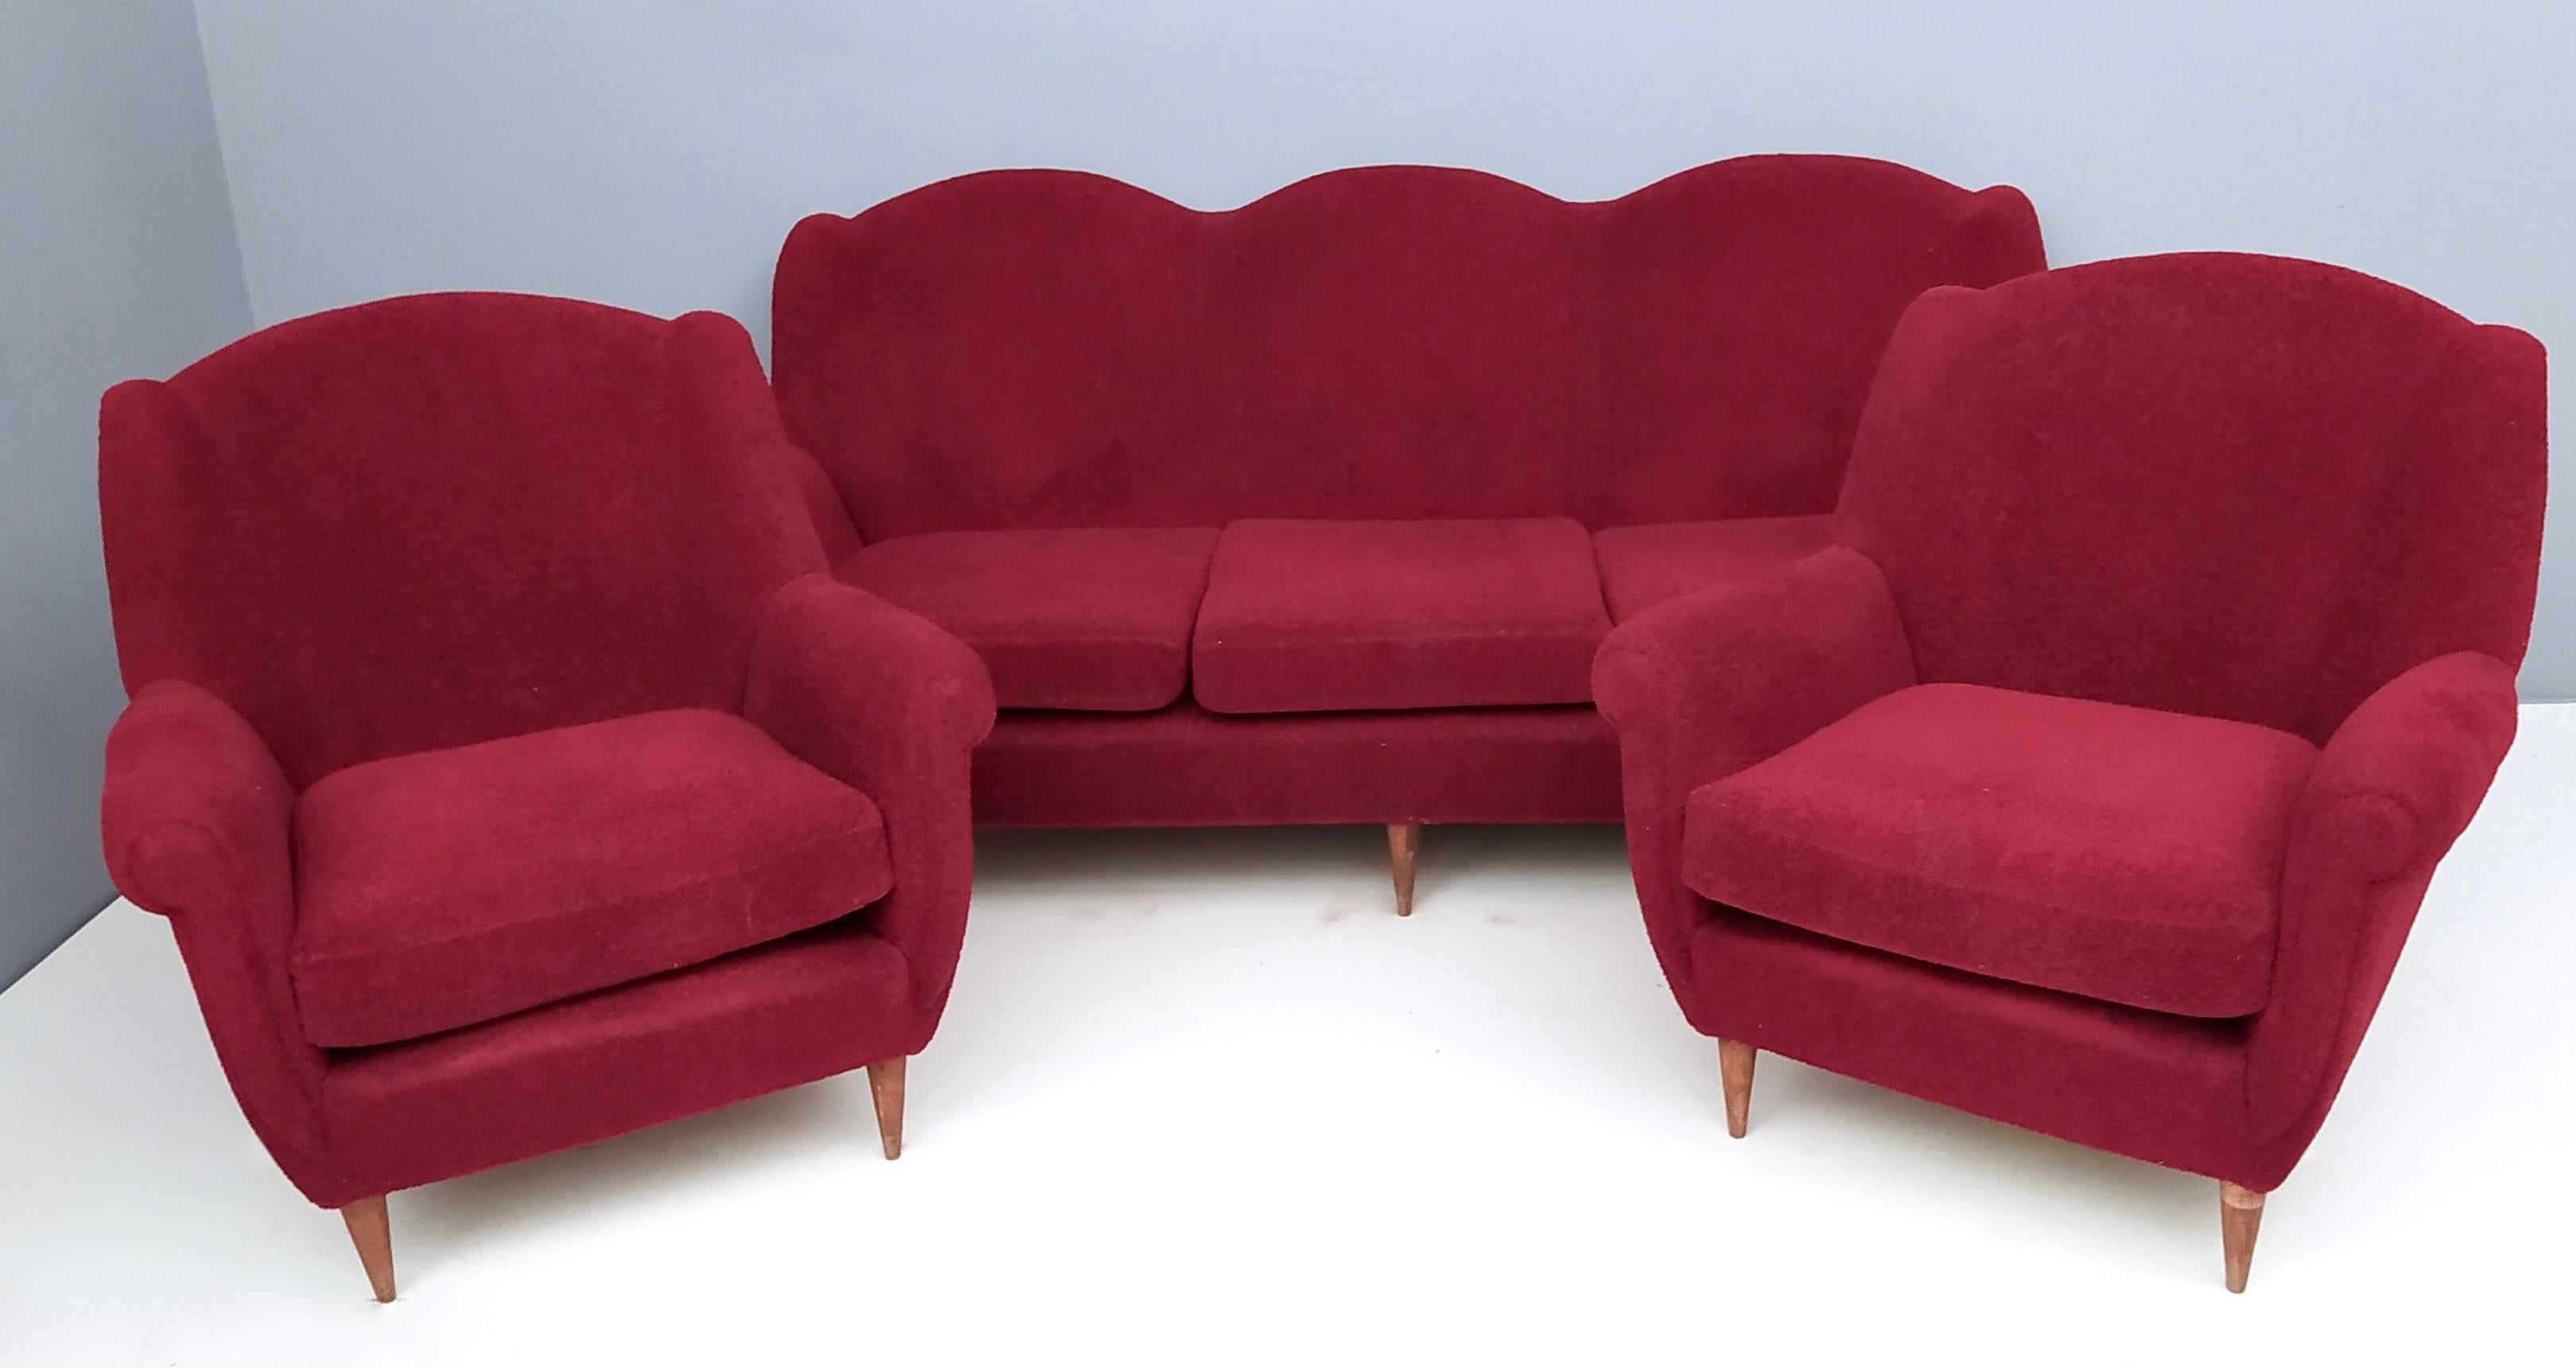 Mid-Century Modern Pair of Crimson Upholstered Armchairs by Gigi Radice for Minotti, Italy, 1950s